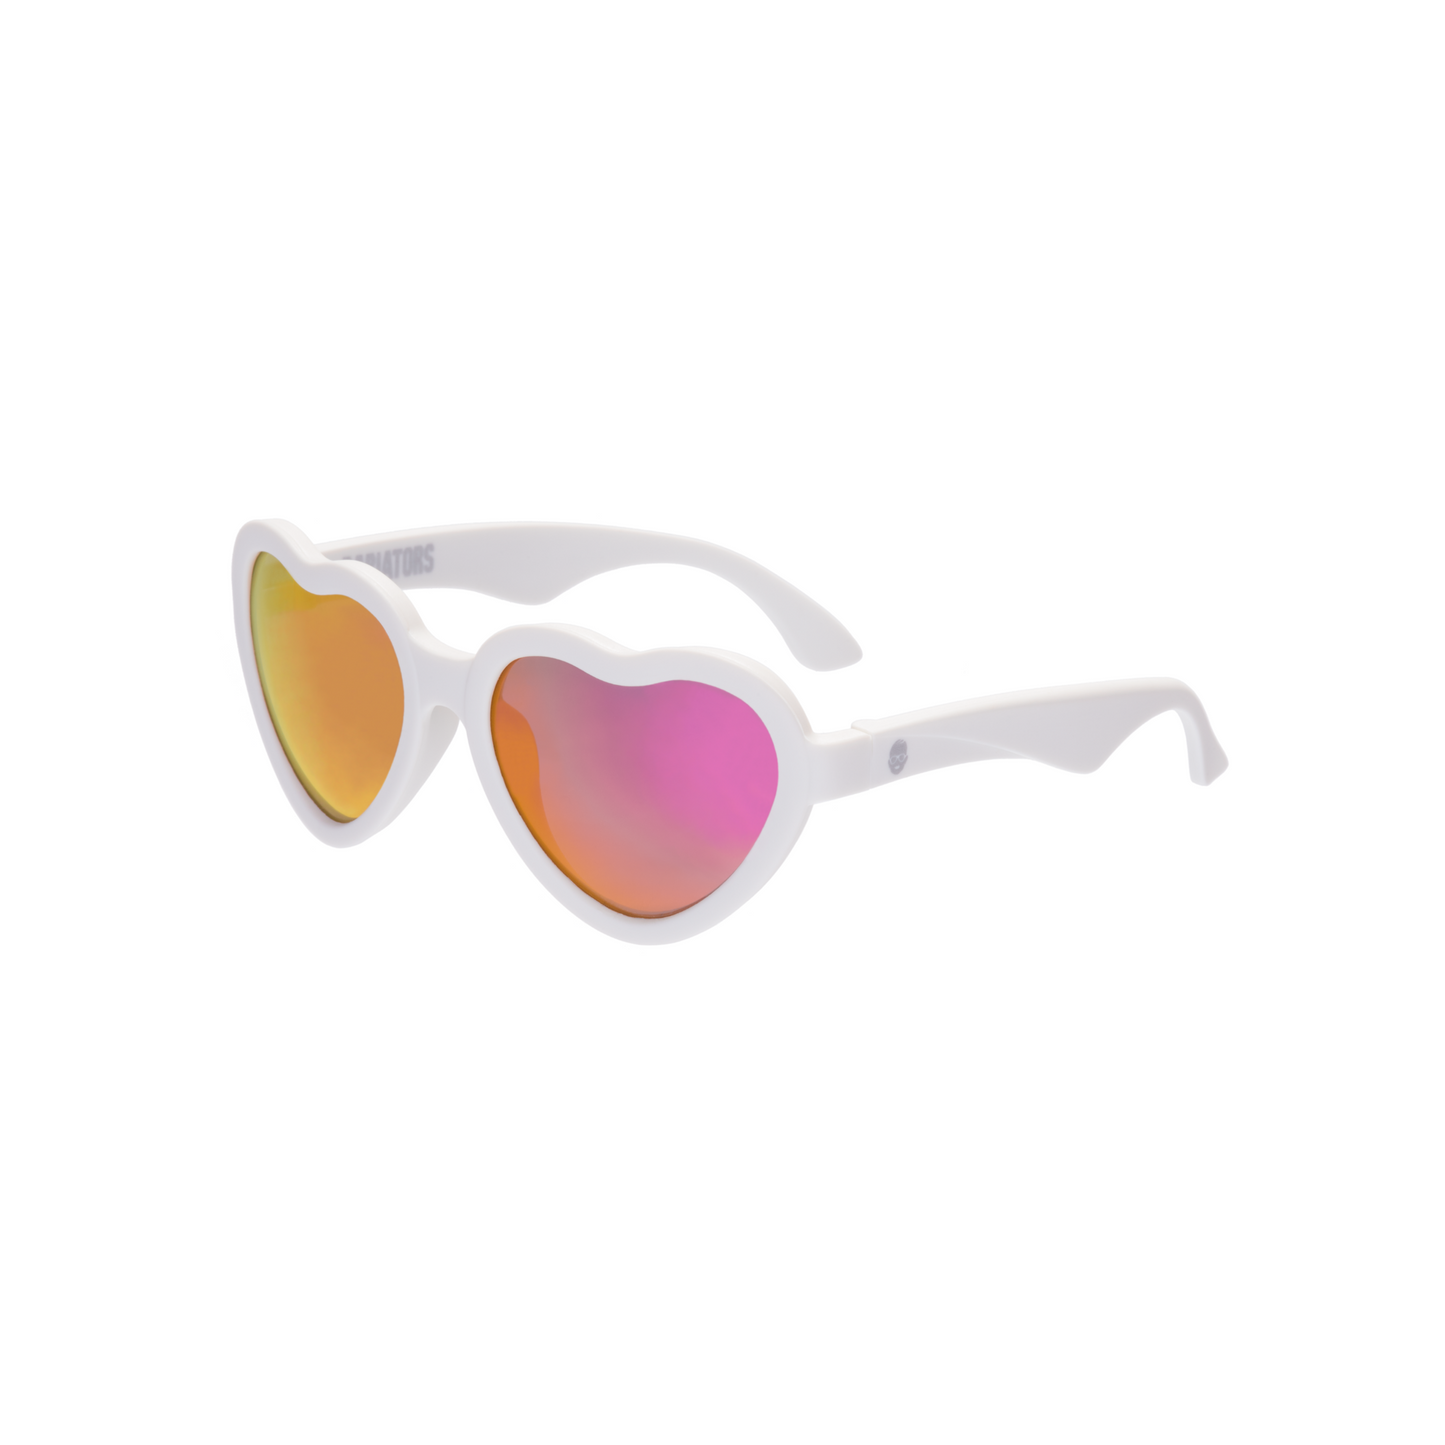 The Sweetheart Heart Ltd Edition Non-Polarized Sunglasses